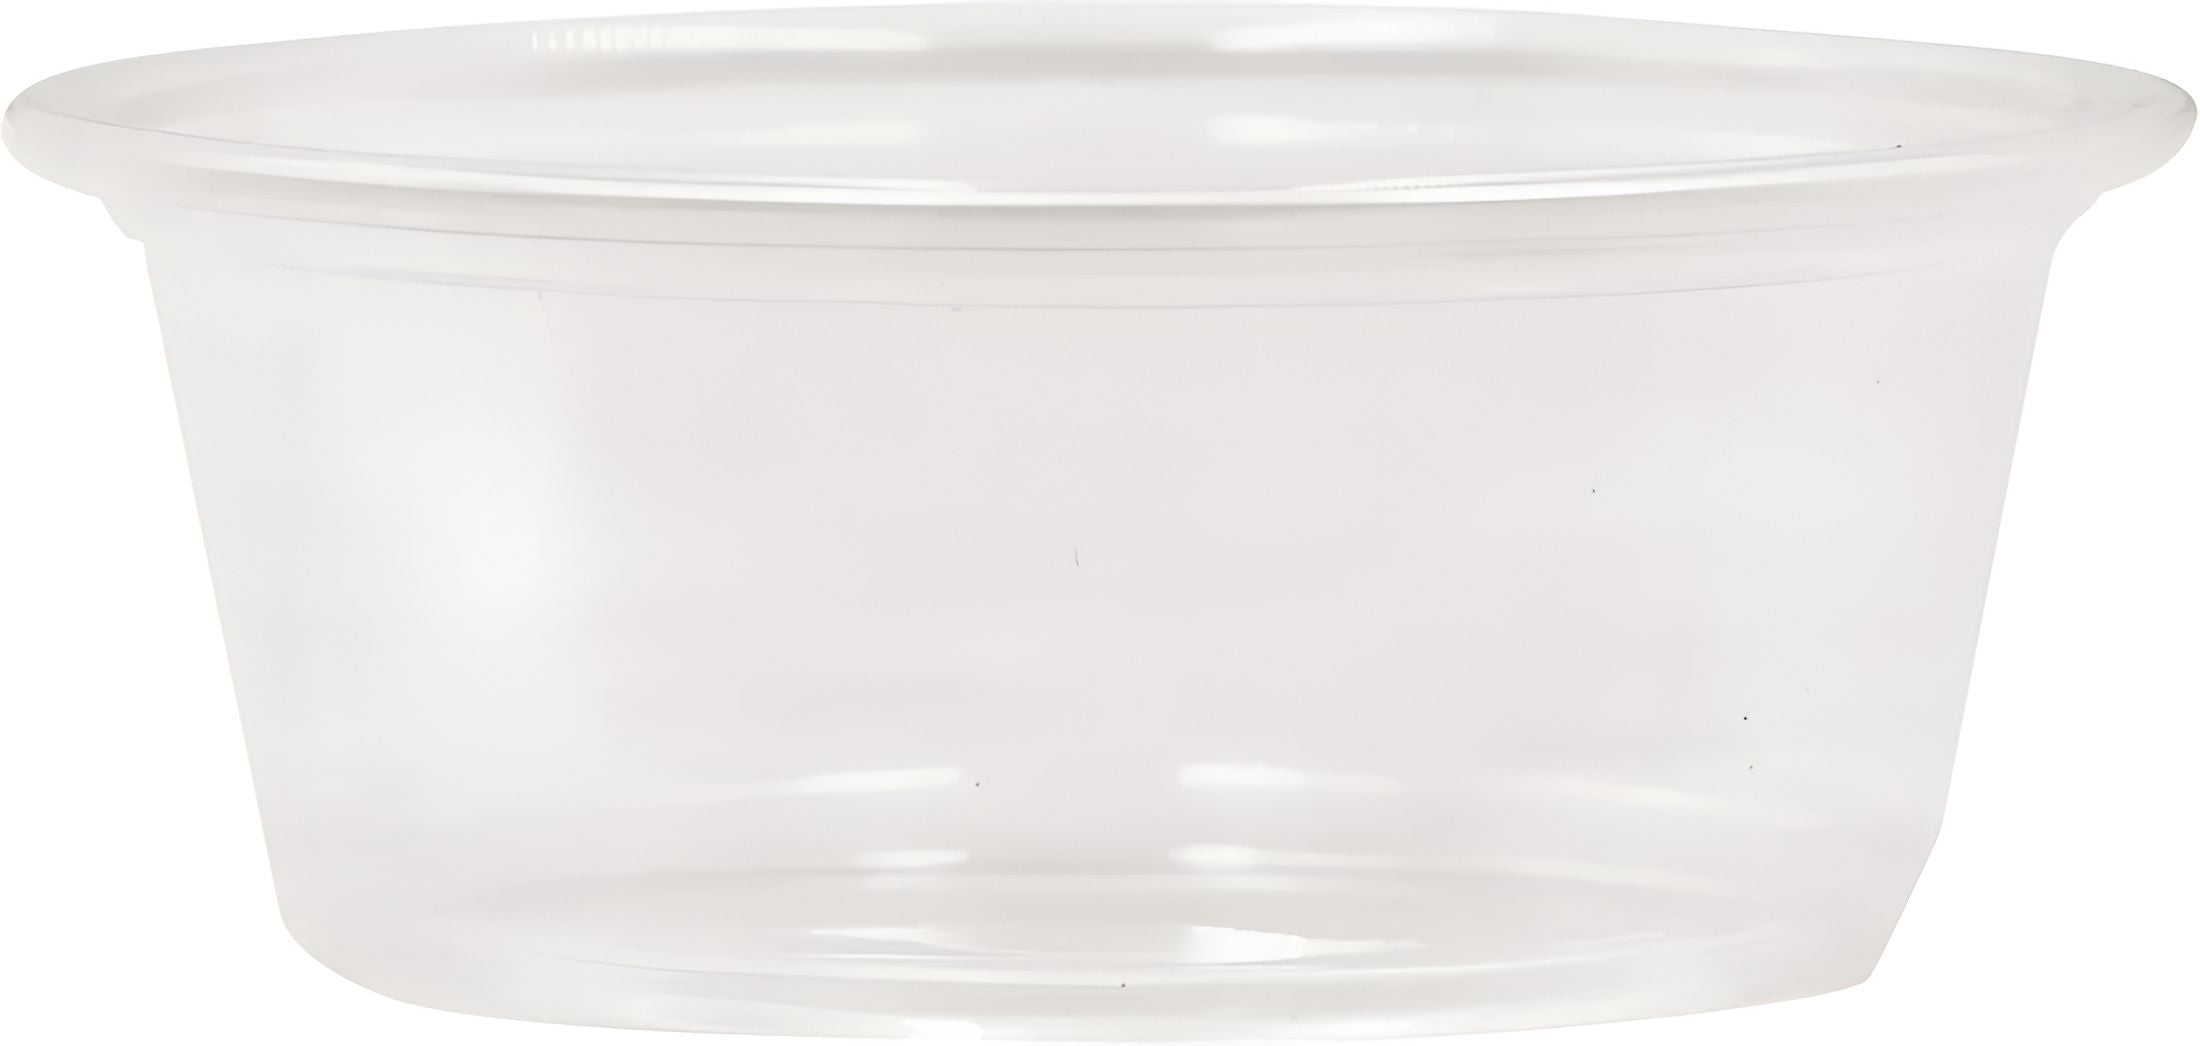 RitePak - 1.5 Oz Clear Plastic Portion Cups, 2500/Cs - PC150